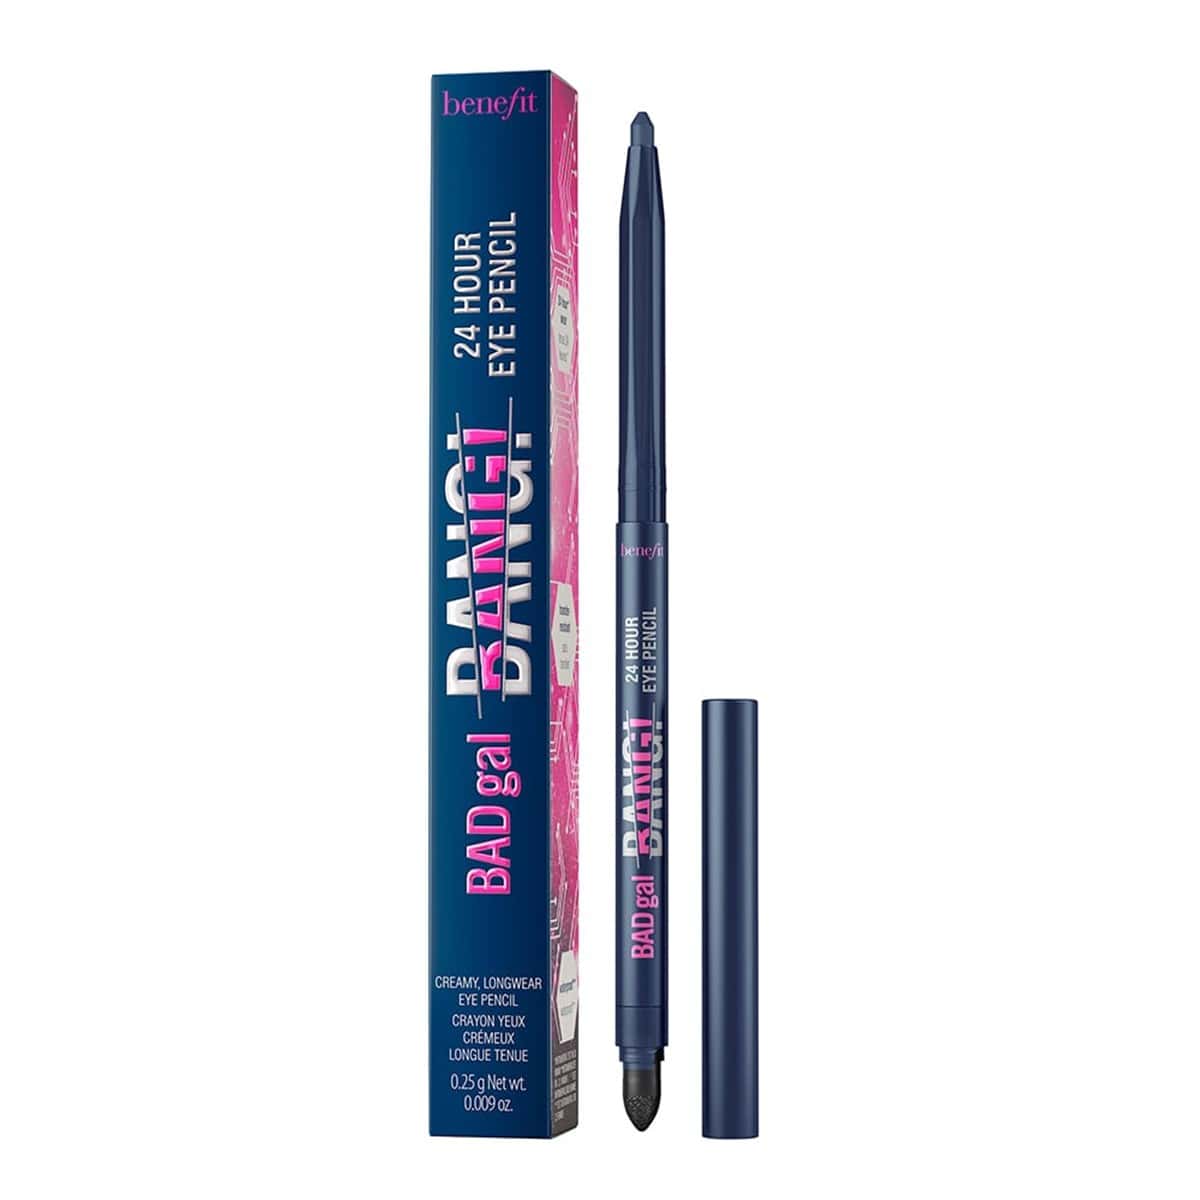 BADgal BANG! 24 Hour Eye Pencil Creamy, Longwear eye liner by Benefit